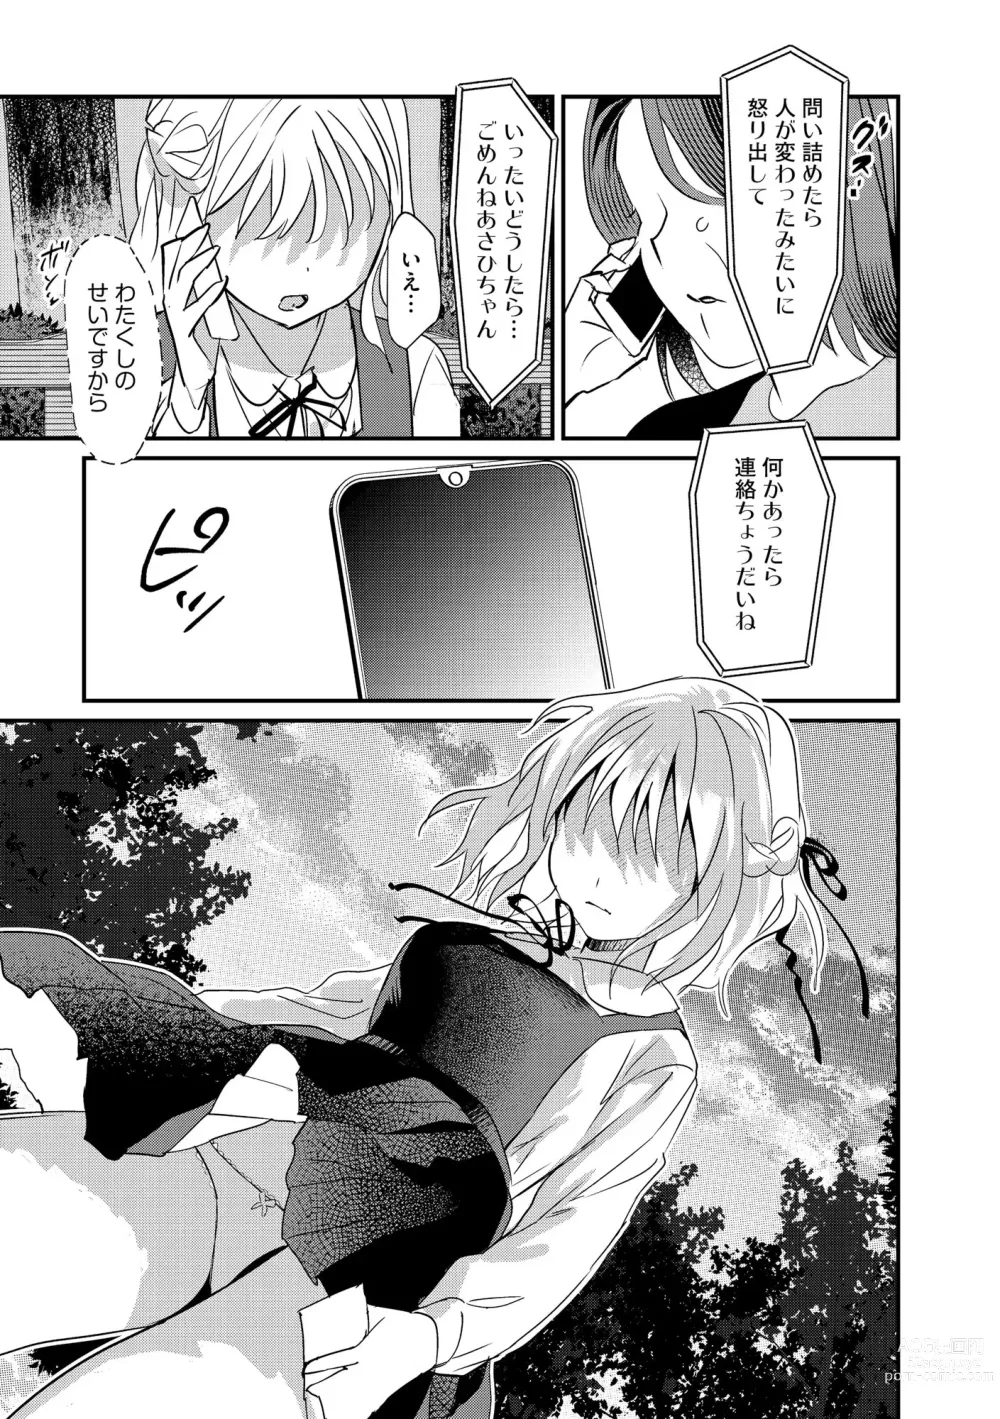 Page 21 of manga Cyberia Plus Vol. 14